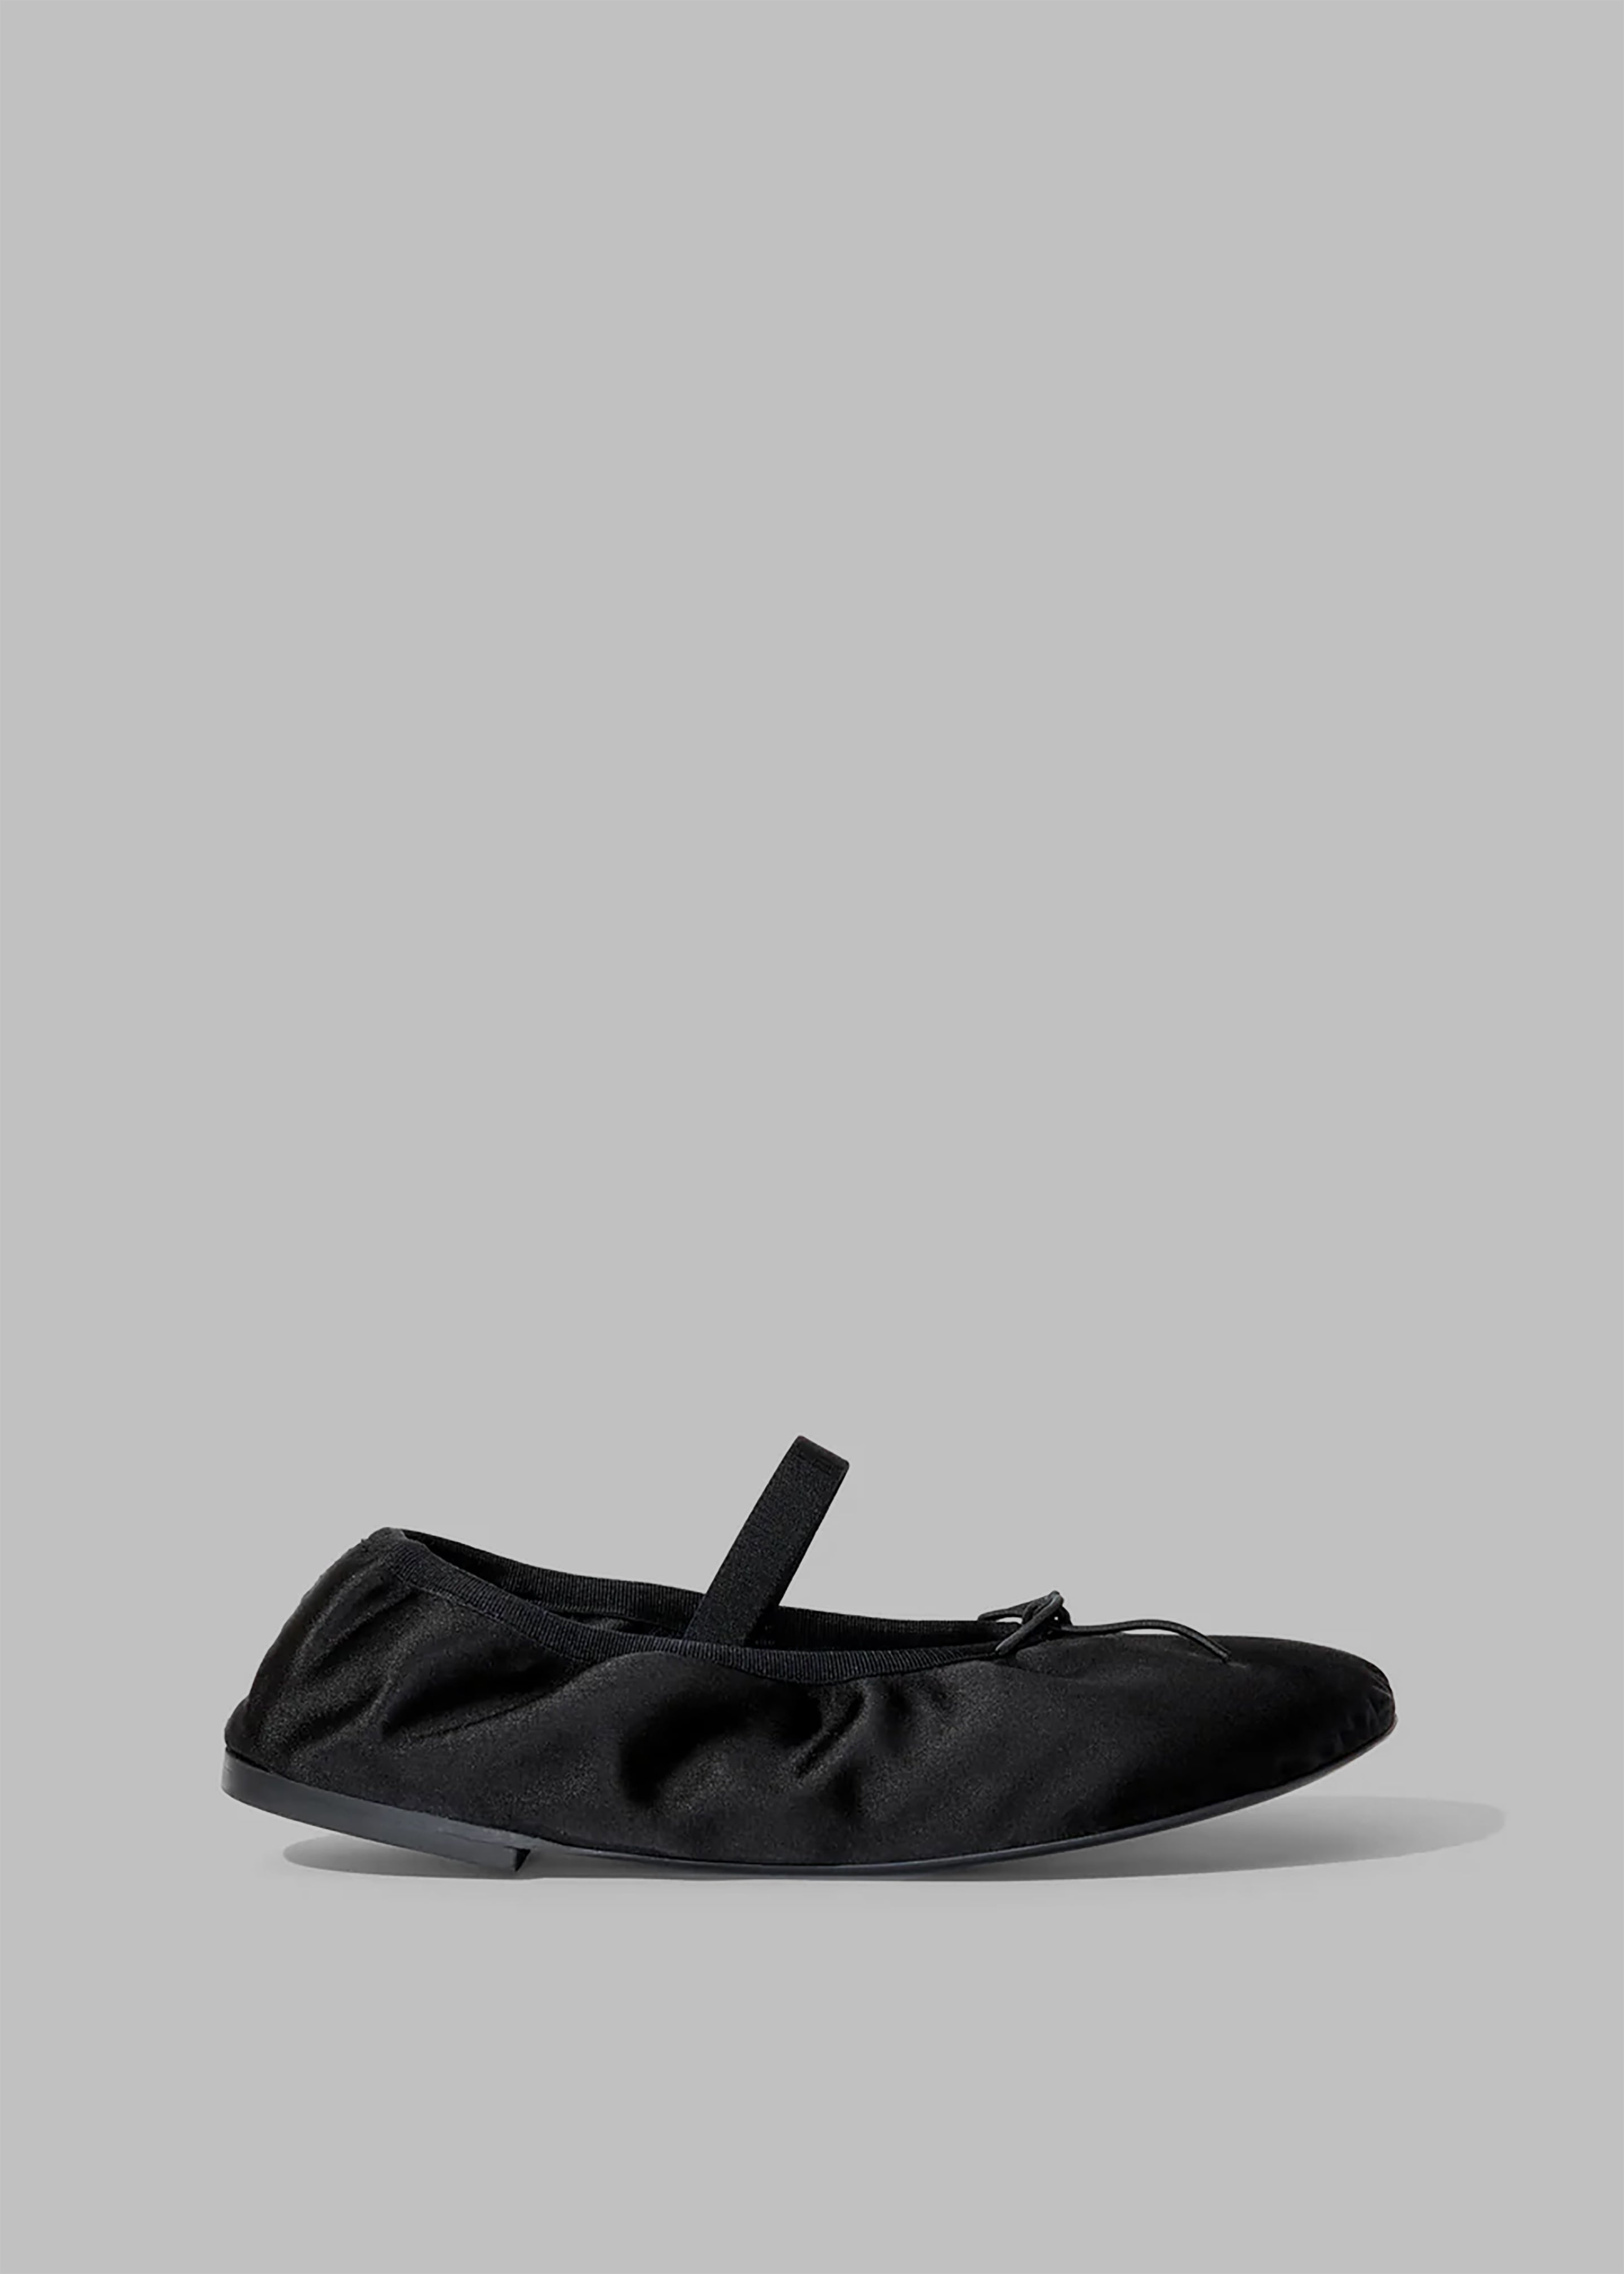 Proenza Schouler Glove Ballet Flats - Black - 5